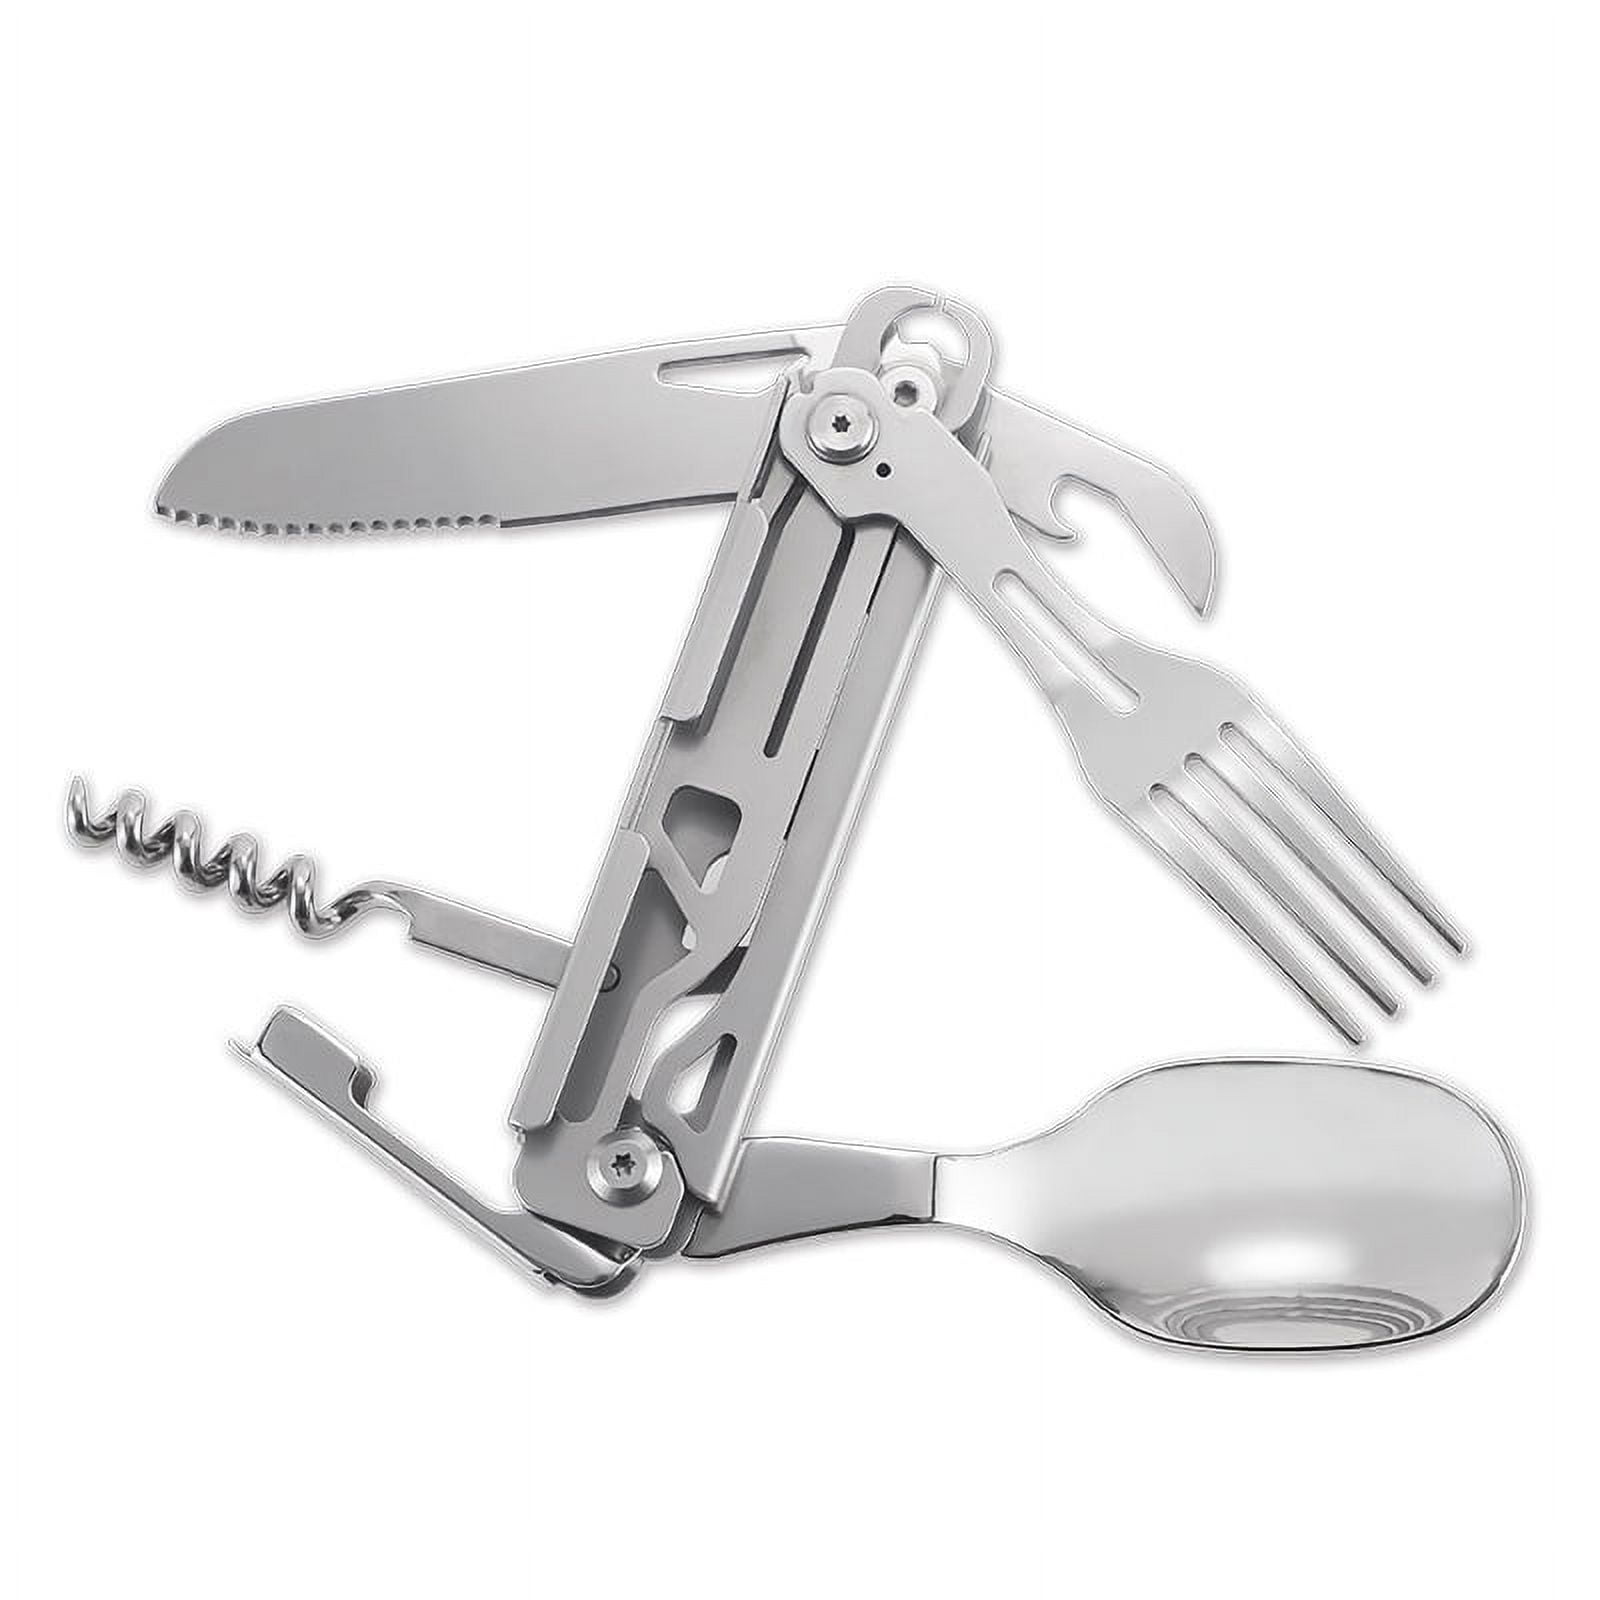 CUBIERTOS CAMPING - kitchen utensils various utensils - Crossnar -  Wholesale Knives